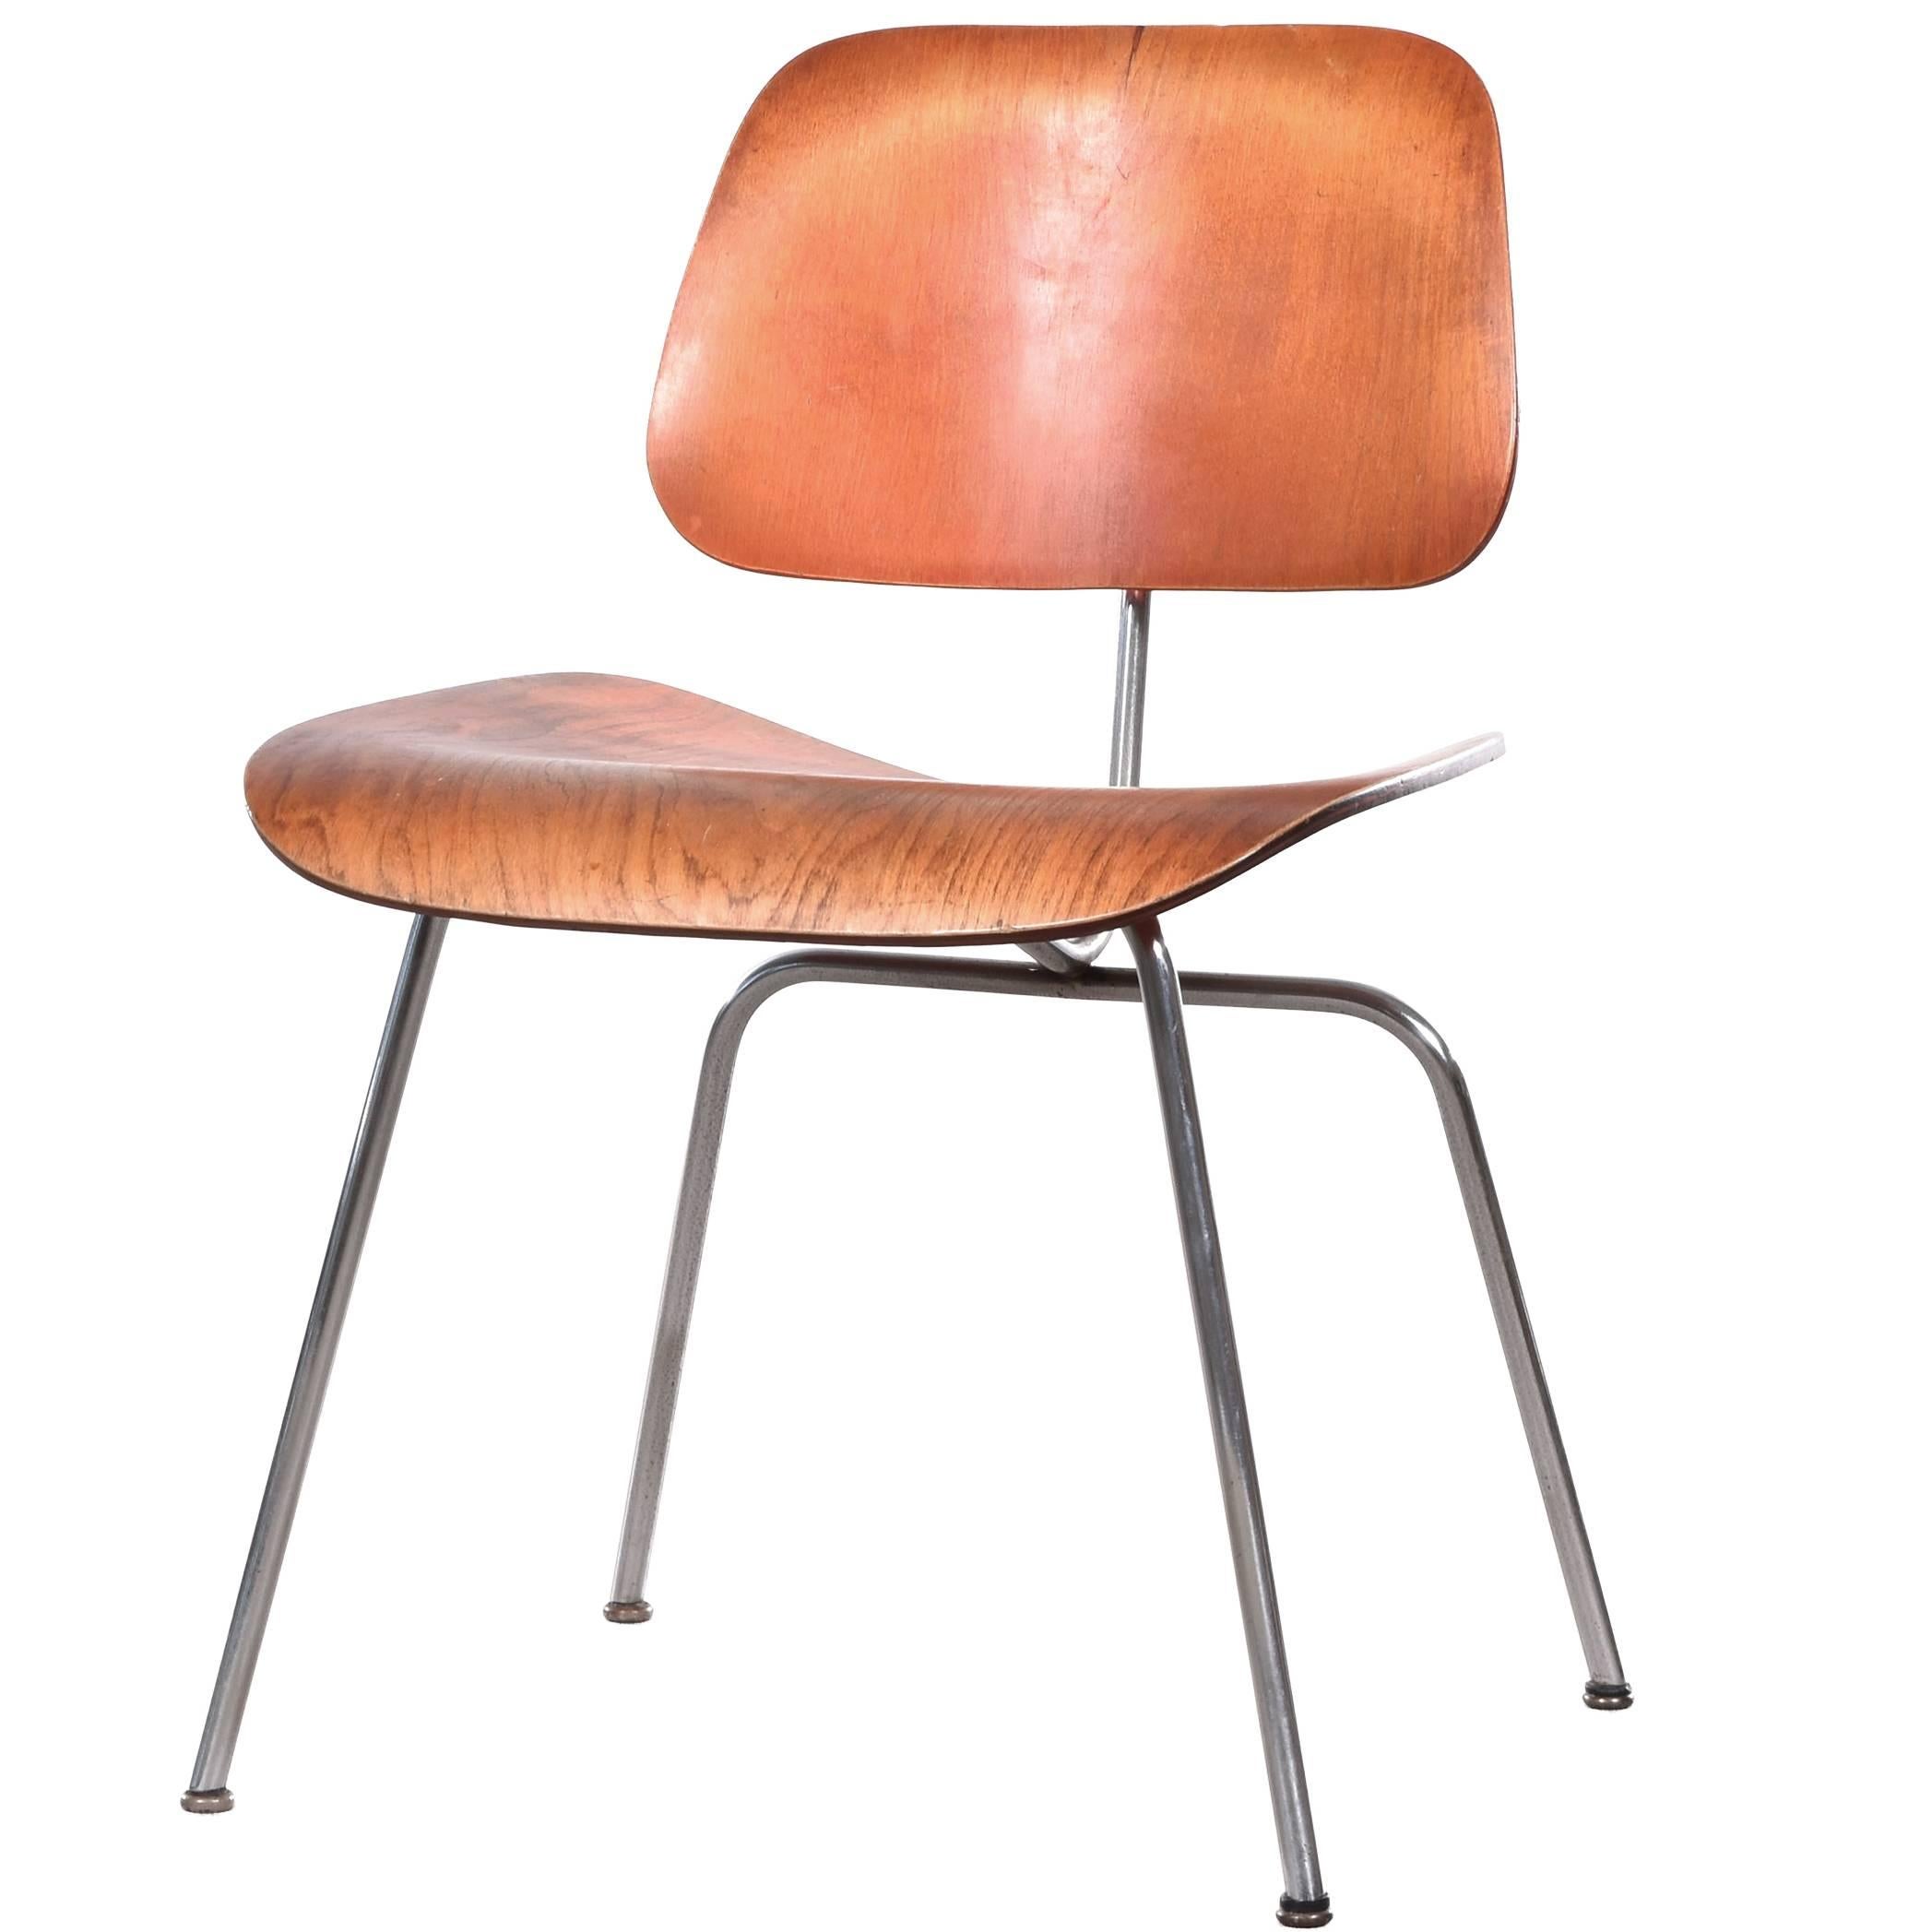 Eames DCM Red Aniline Dye Side Chair Herman Miller, USA